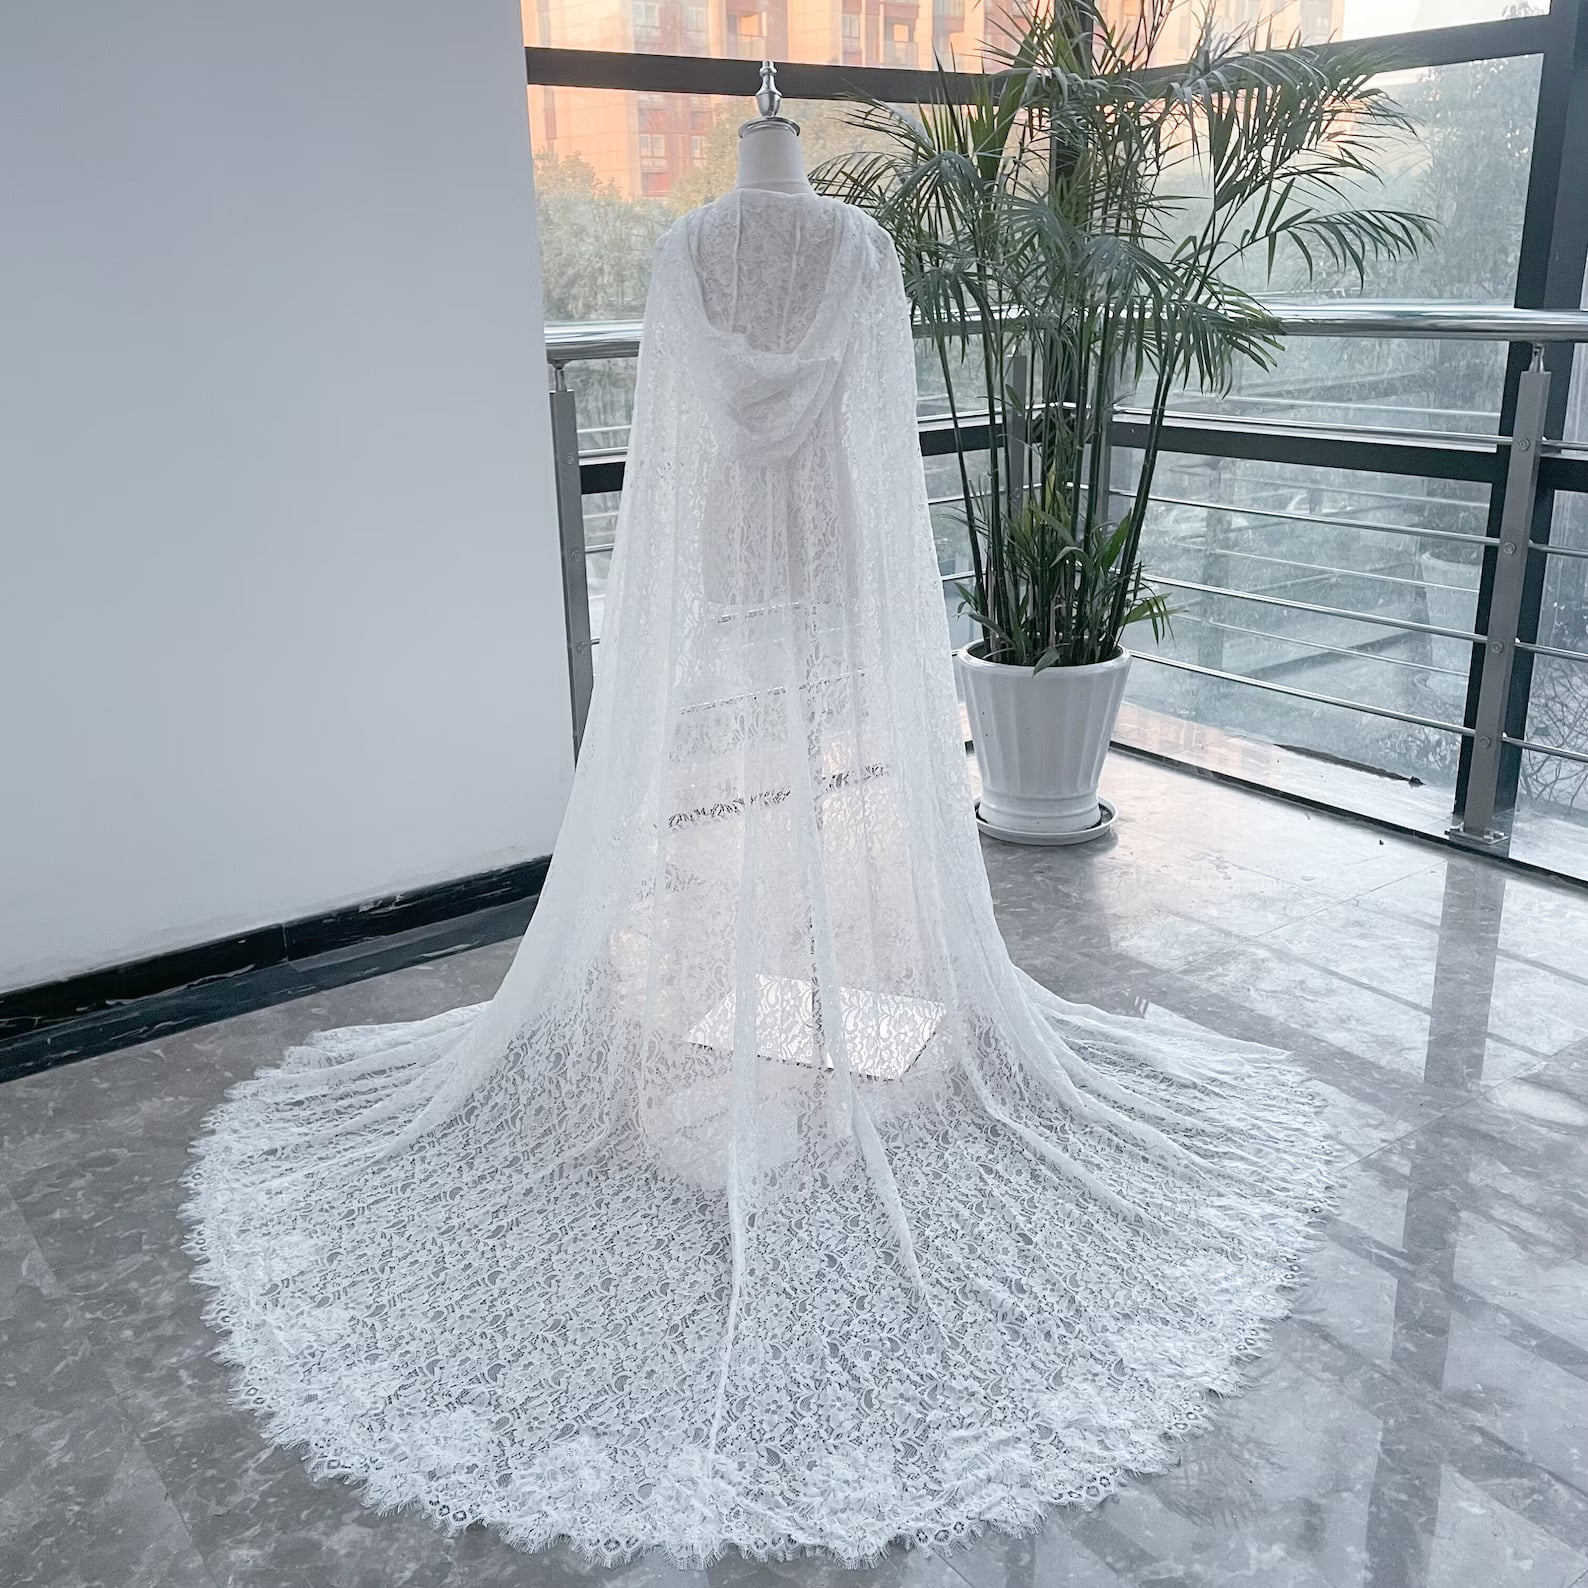 SINDALU Wedding Cape Veil,Lace Cape Veil,Bridal Cloak Hooded Ivory Lace ...